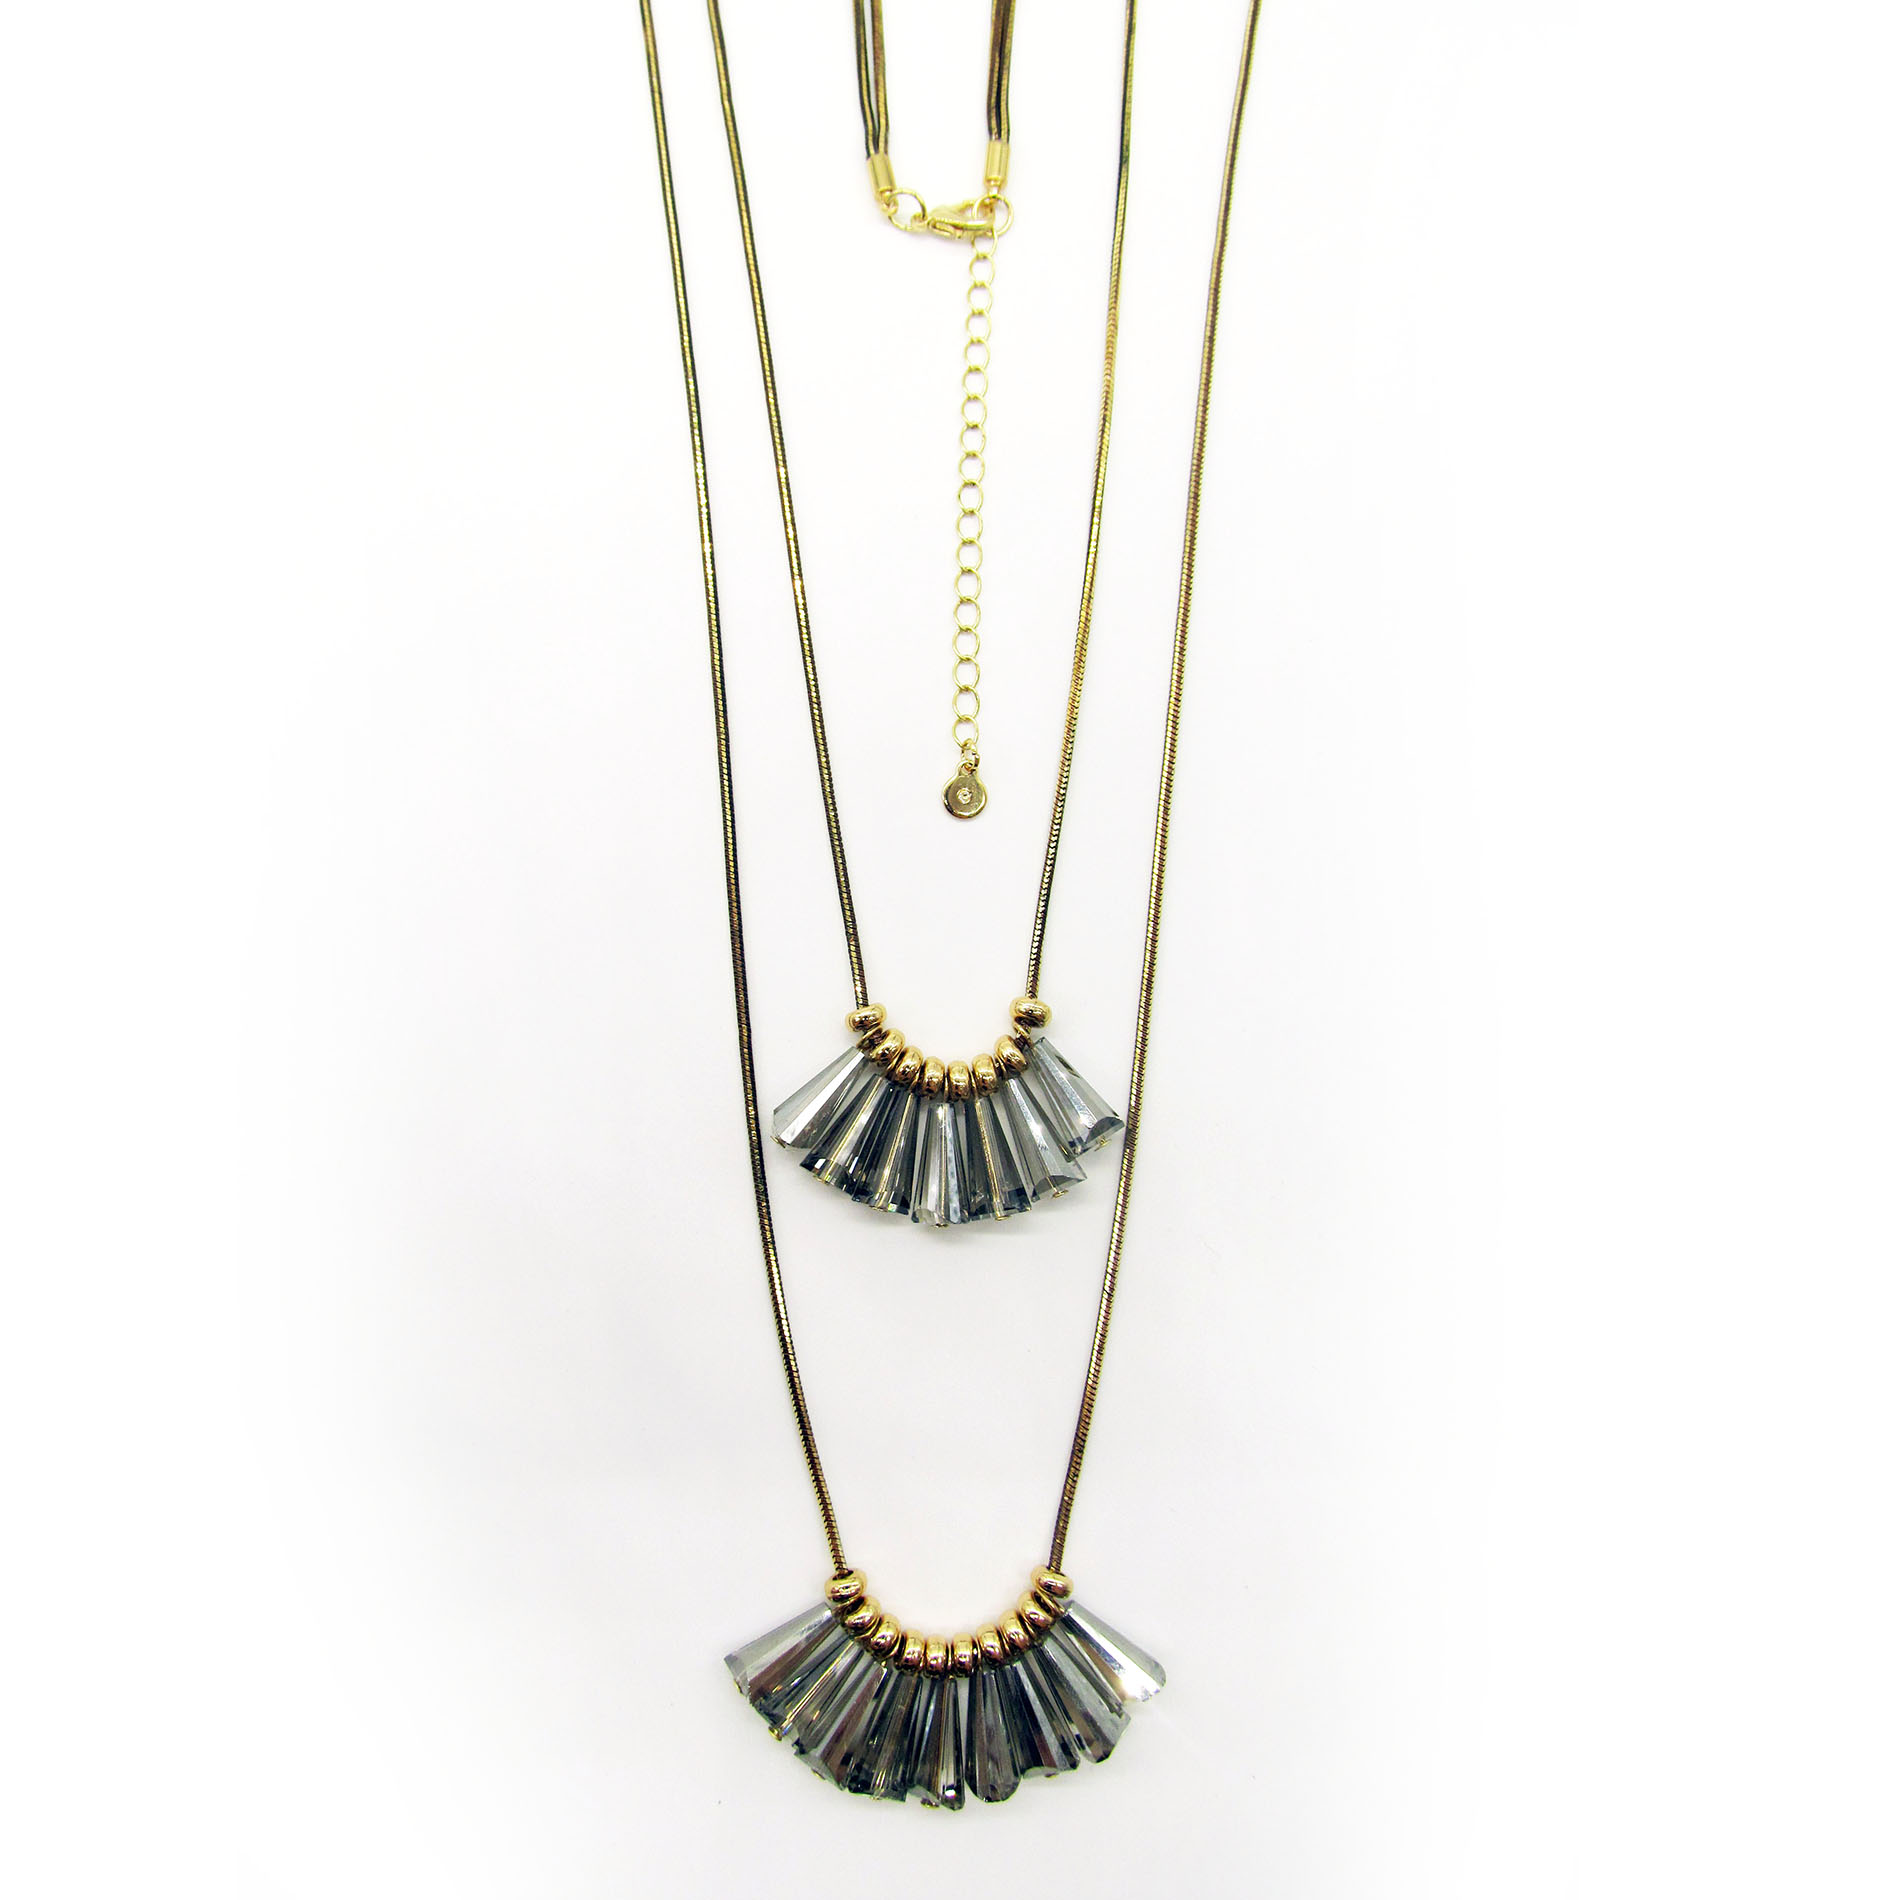 Studio S Gold-Tone Double Row Necklace with Black Diamond Drops